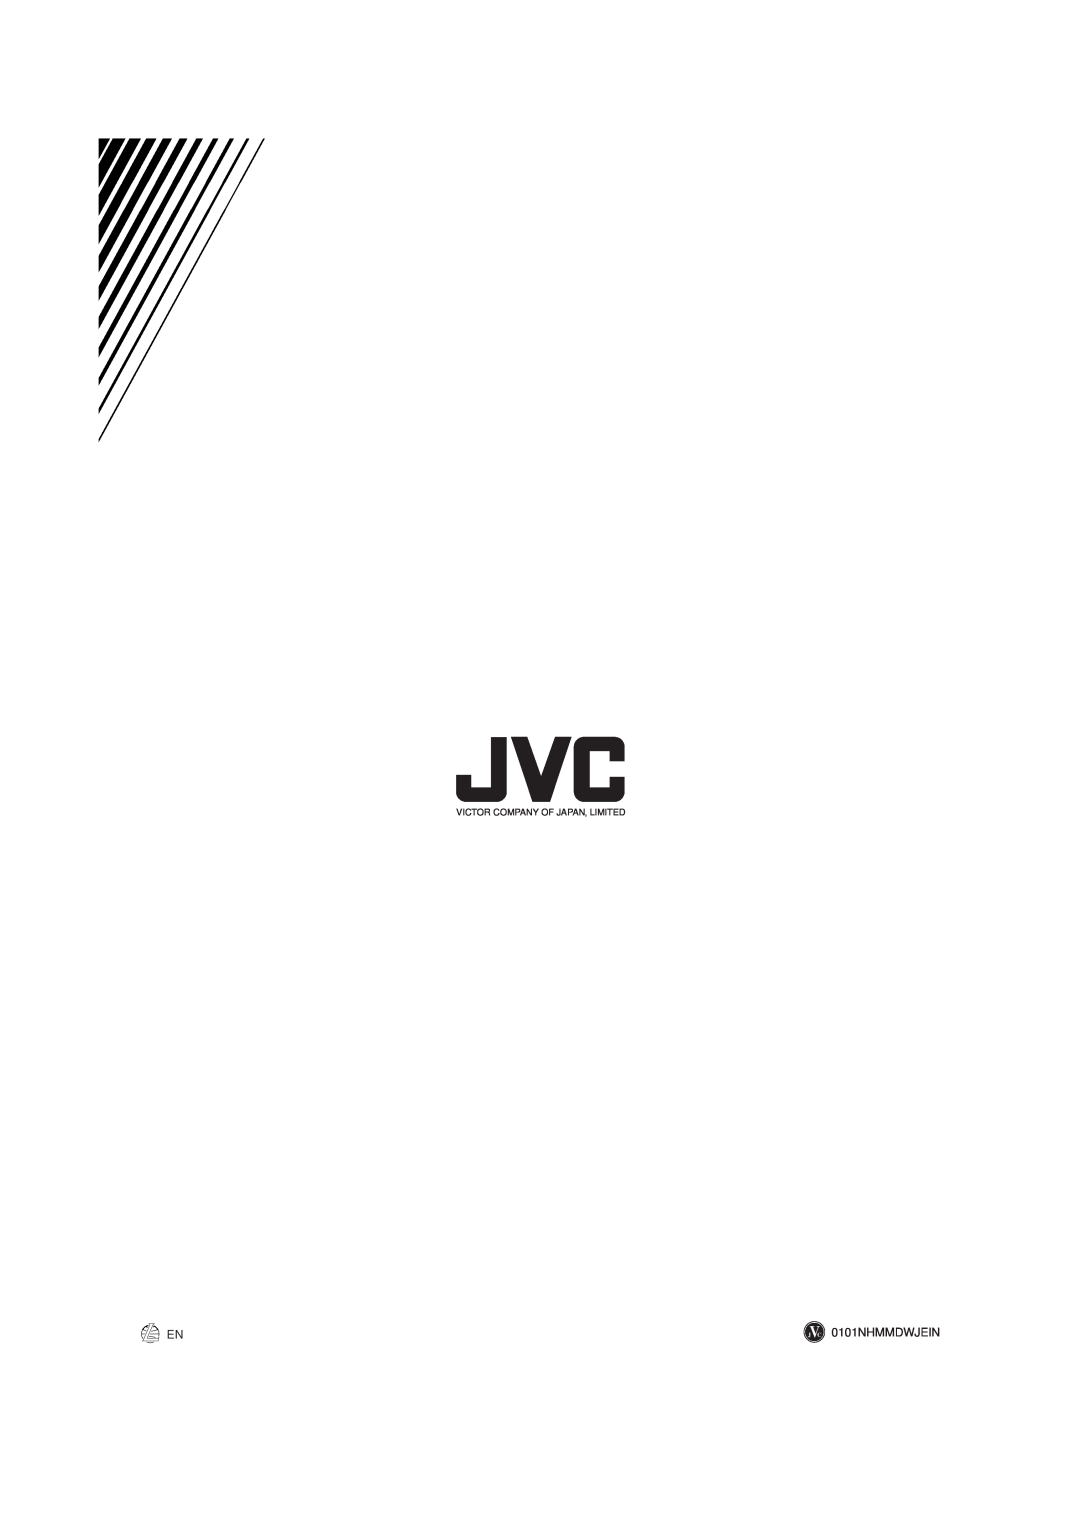 JVC RX-6018VBK manual 0101NHMMDWJEIN, Victor Company Of Japan, Limited 